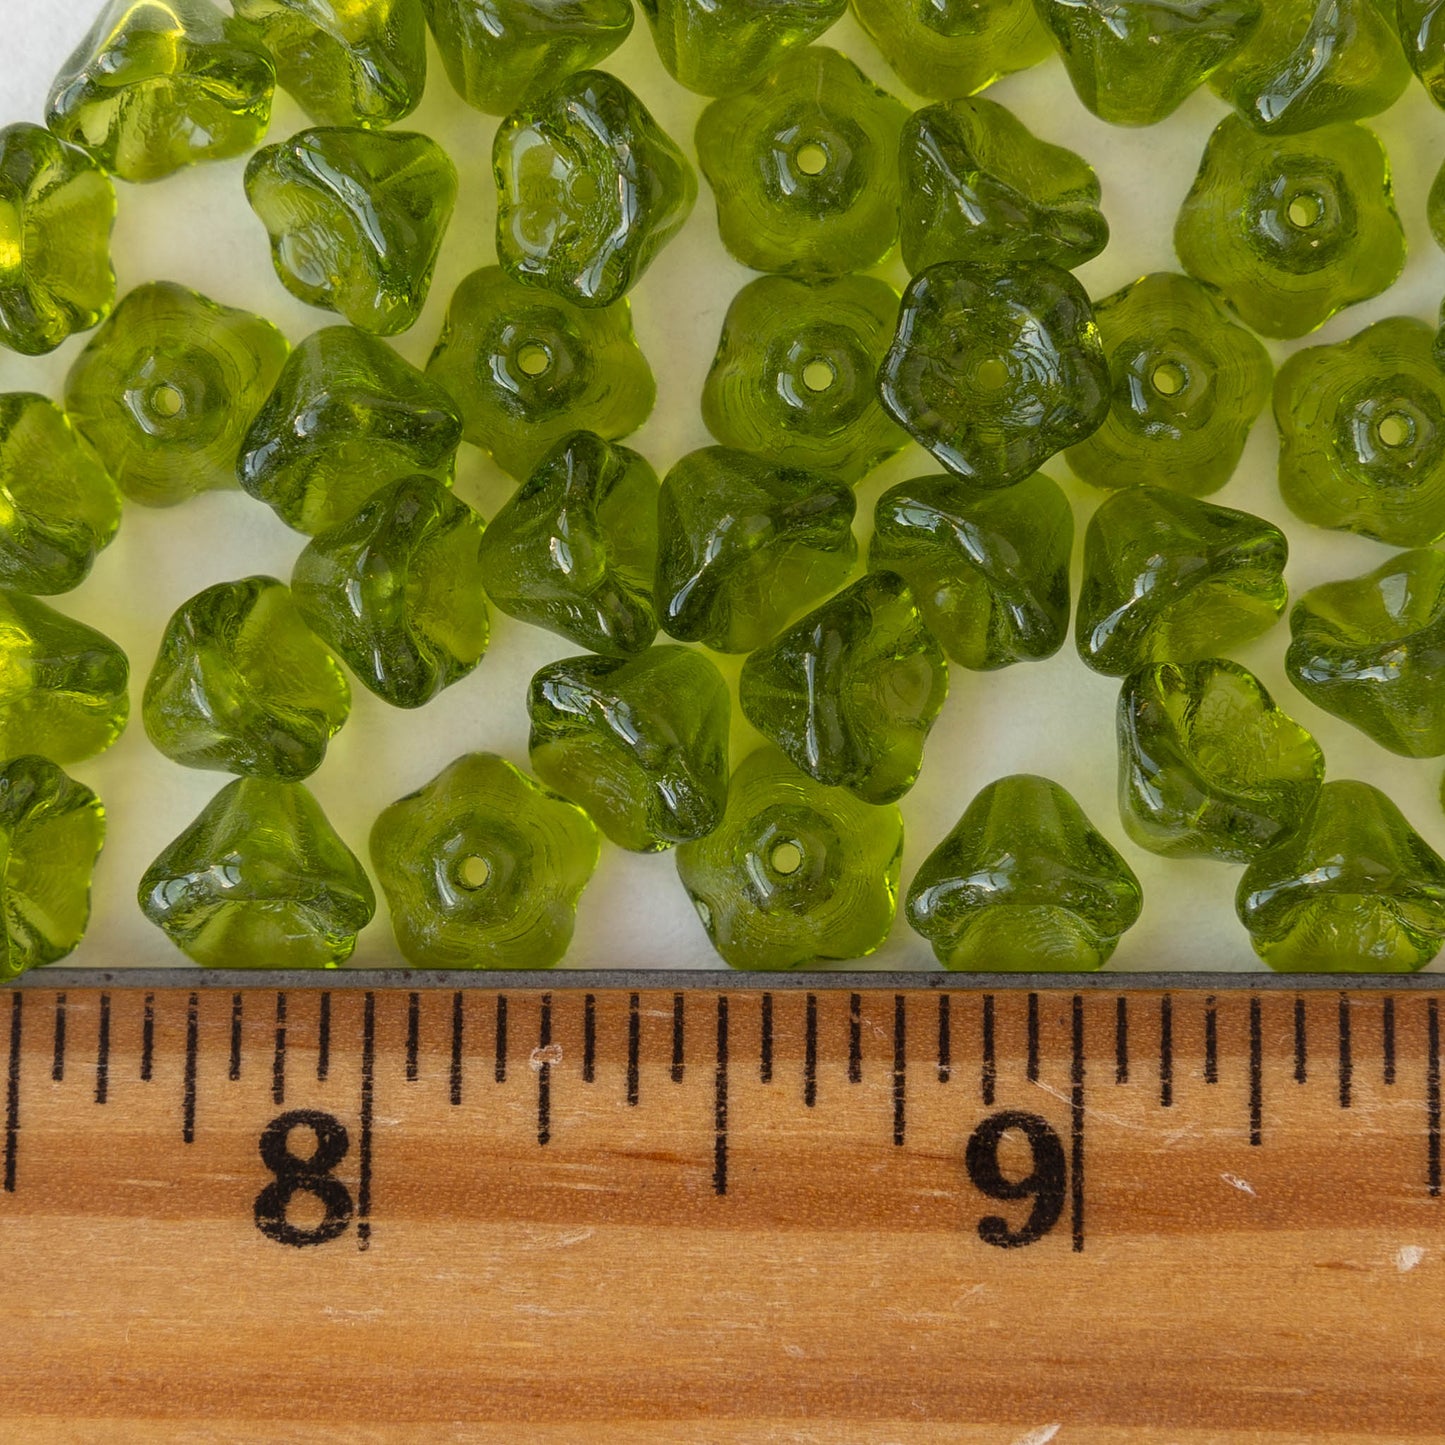 6x8mm Glass Flower Beads - Olivine - 30